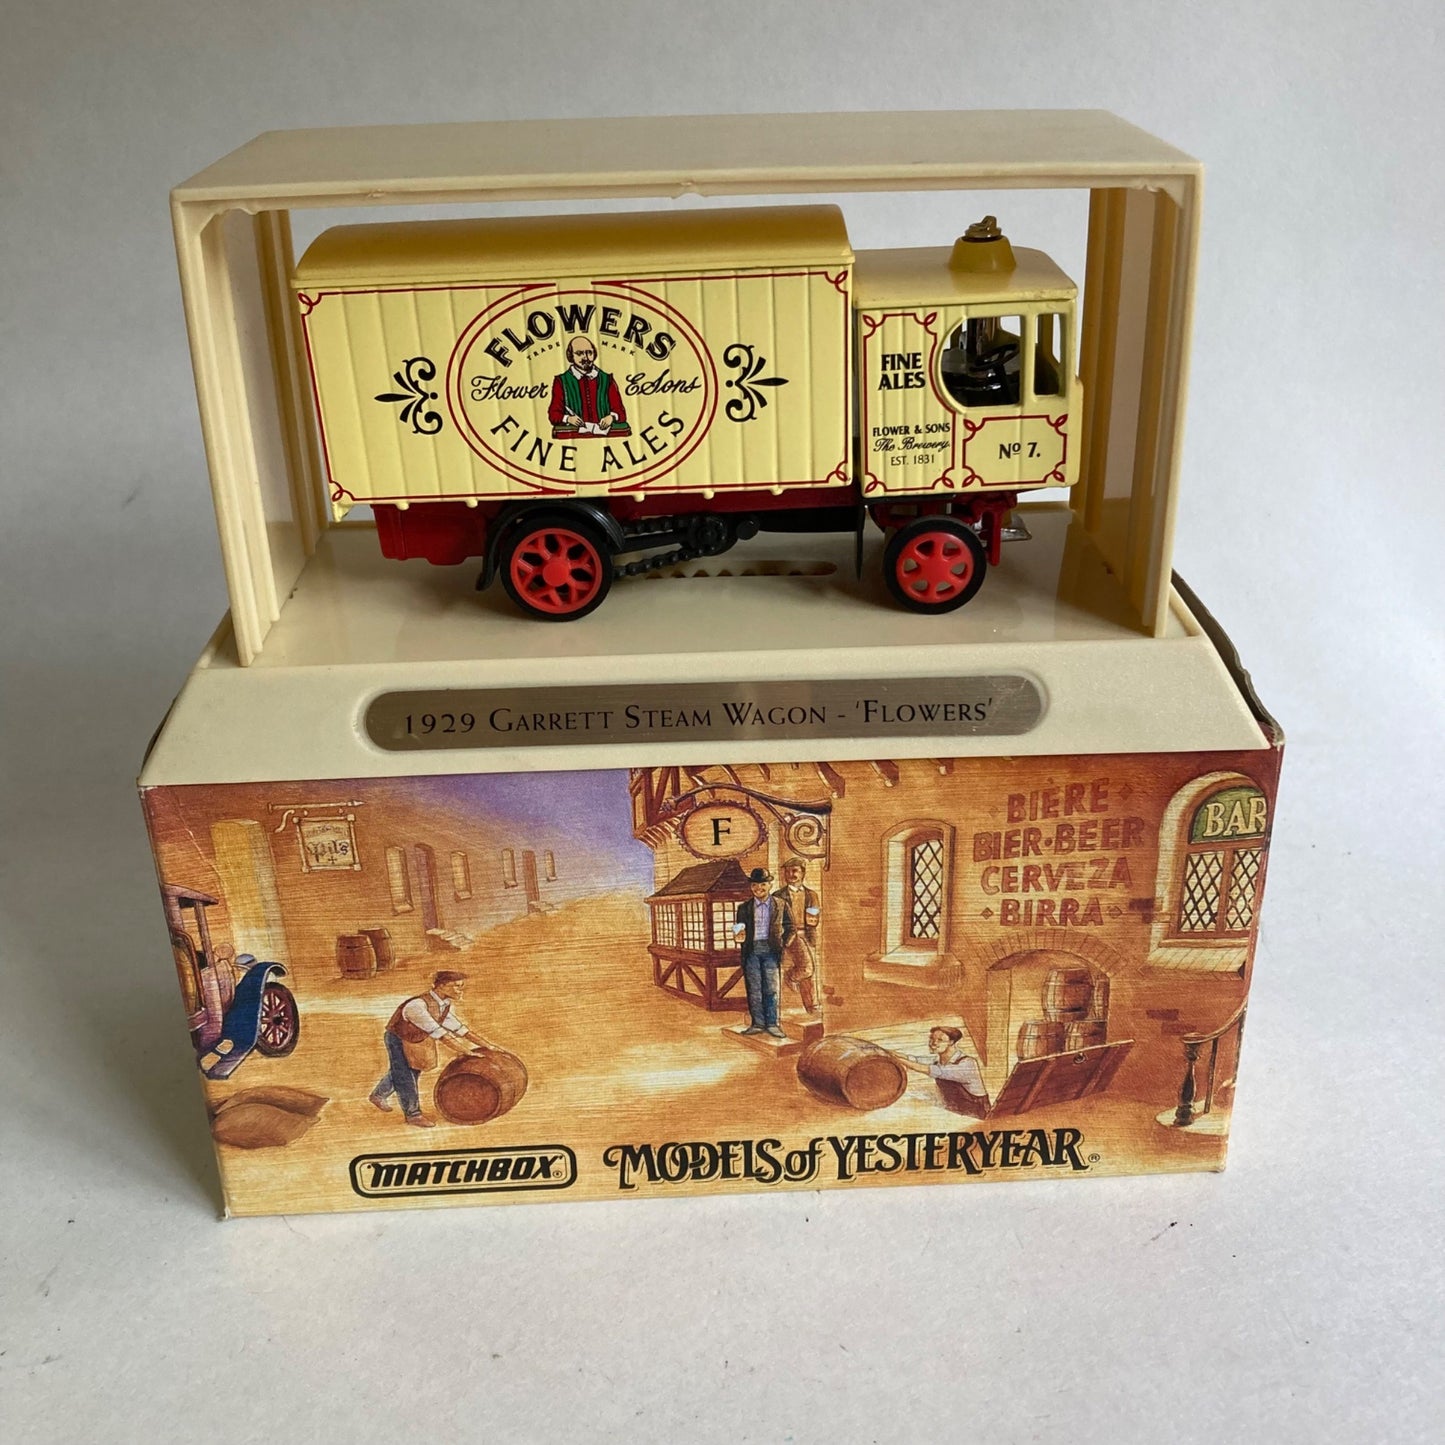 Matchbox Models Yesteryear 1929 Garrett Steam Wagon Flowers Fine Ales Beer Truck